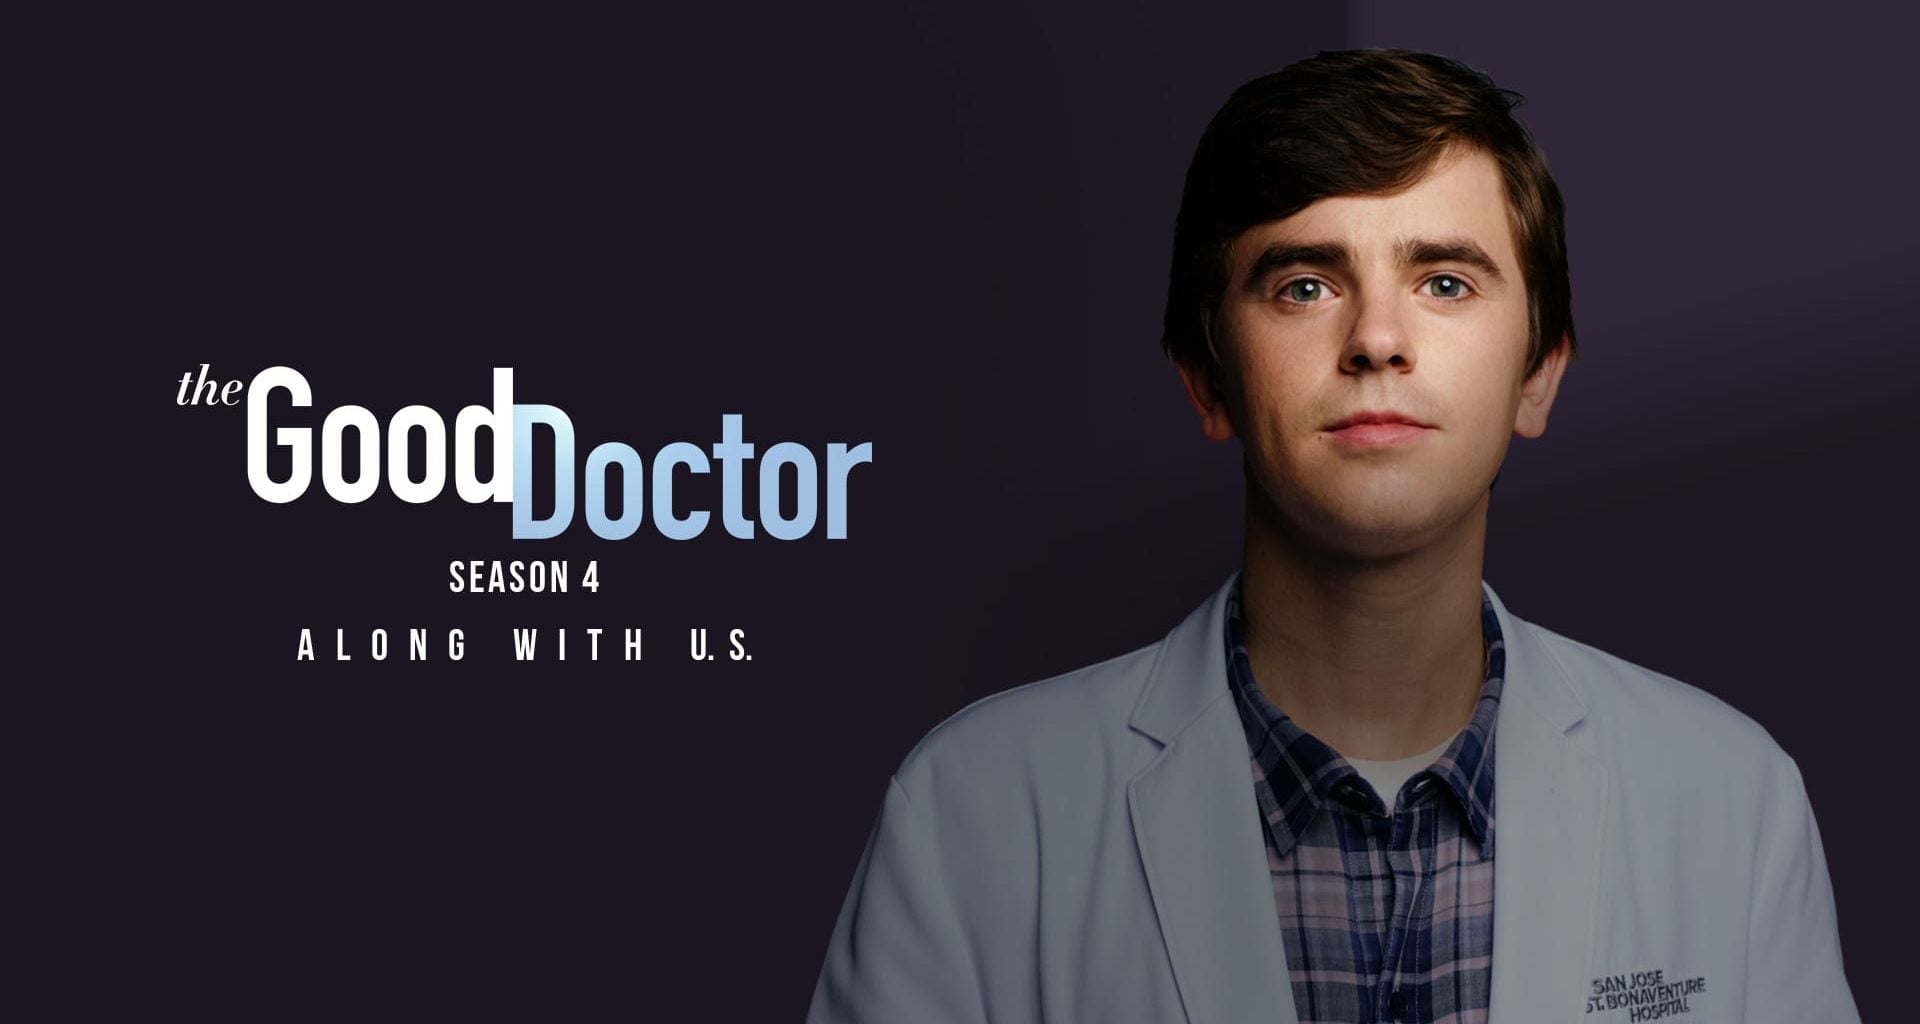 The Good Doctor Season 4 Plot Cast The Good Doctor Season 5 and Spoilers